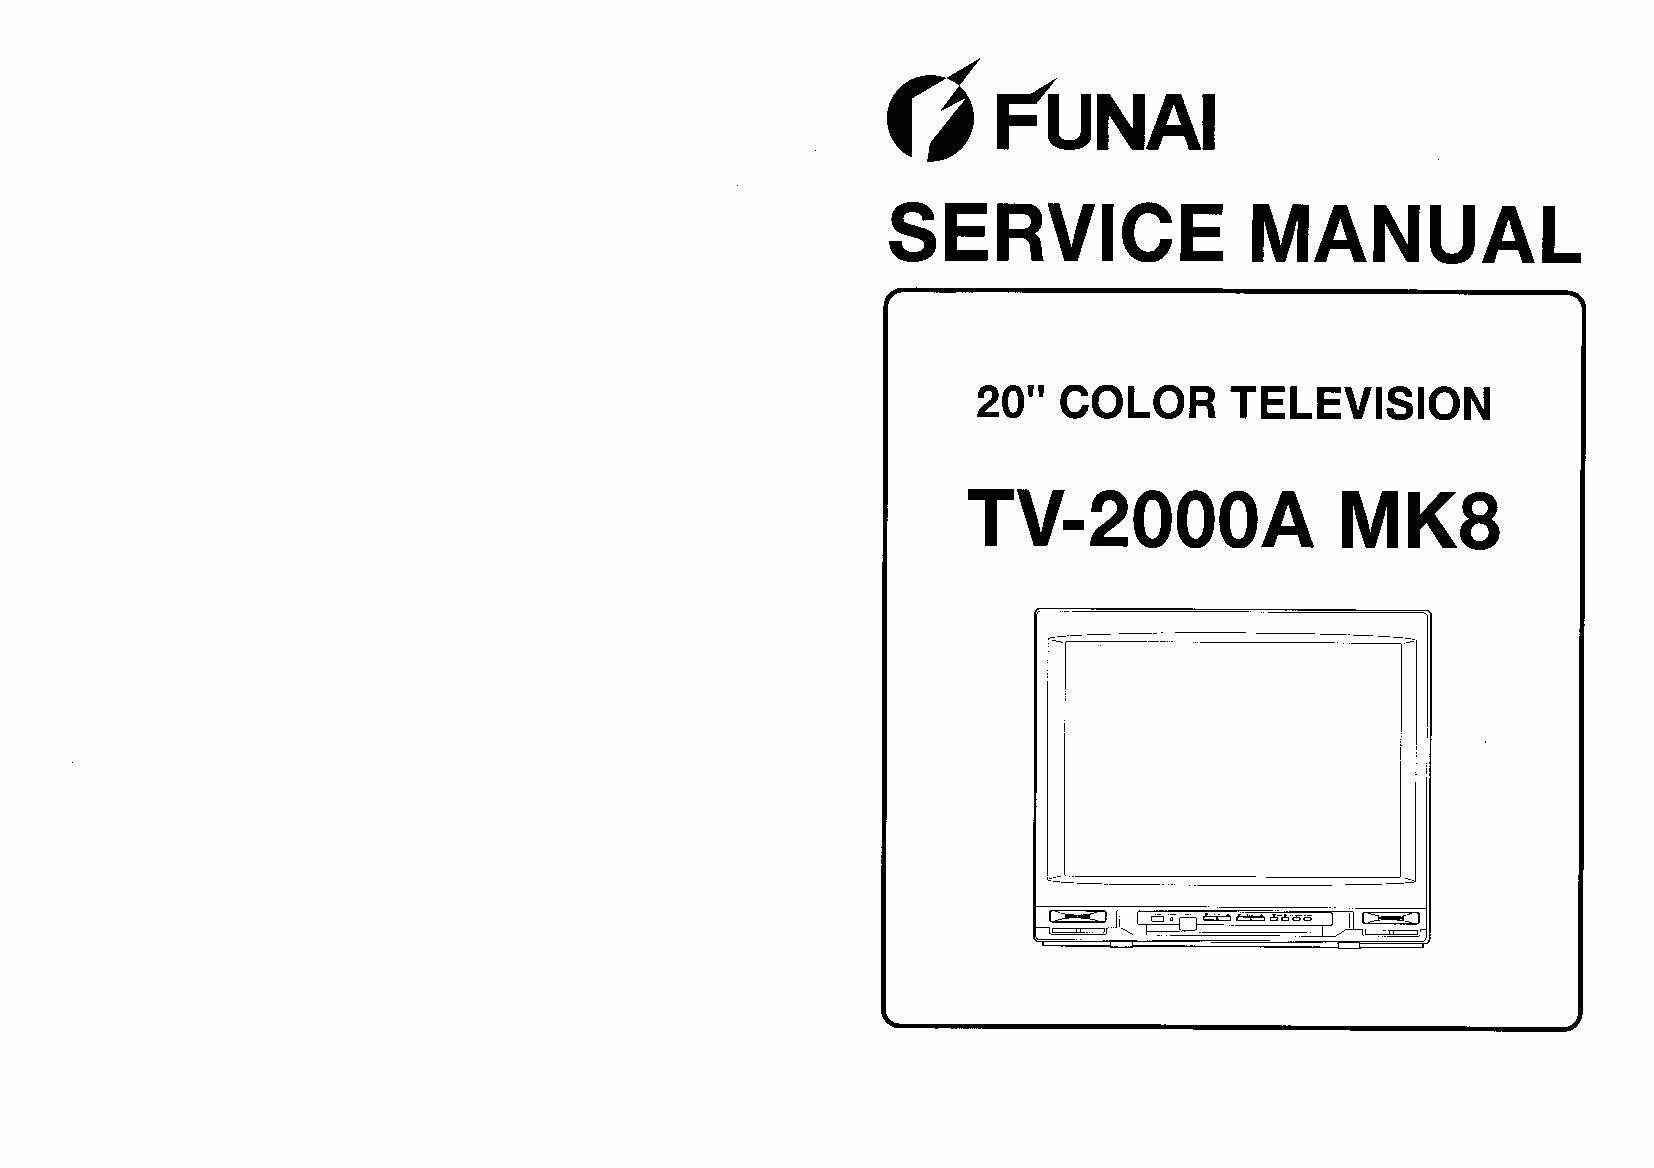 Funai видеомагнитофон инструкция